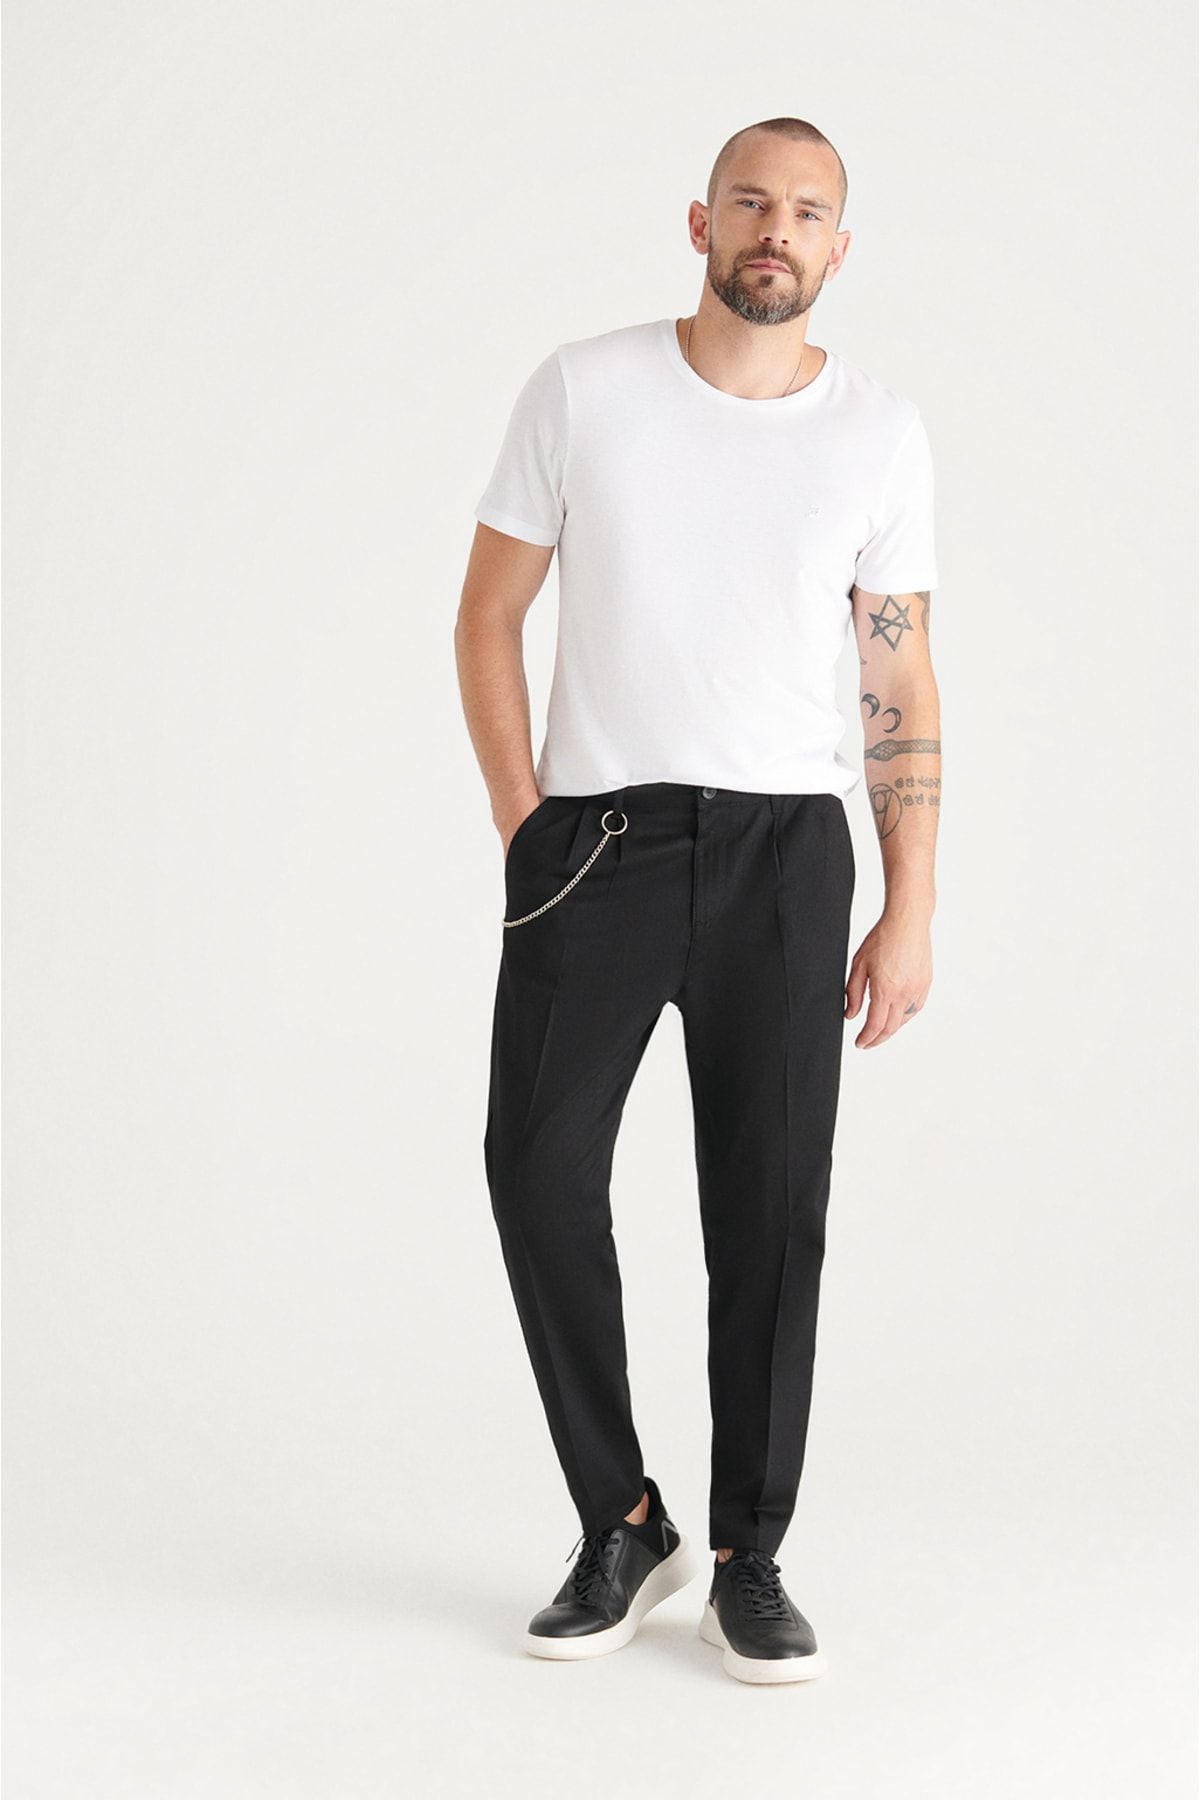 Avva Erkek Siyah Yandan Cepli Pileli Zincir Detaylı Düz Relaxed Fit Pantolon A11y3010